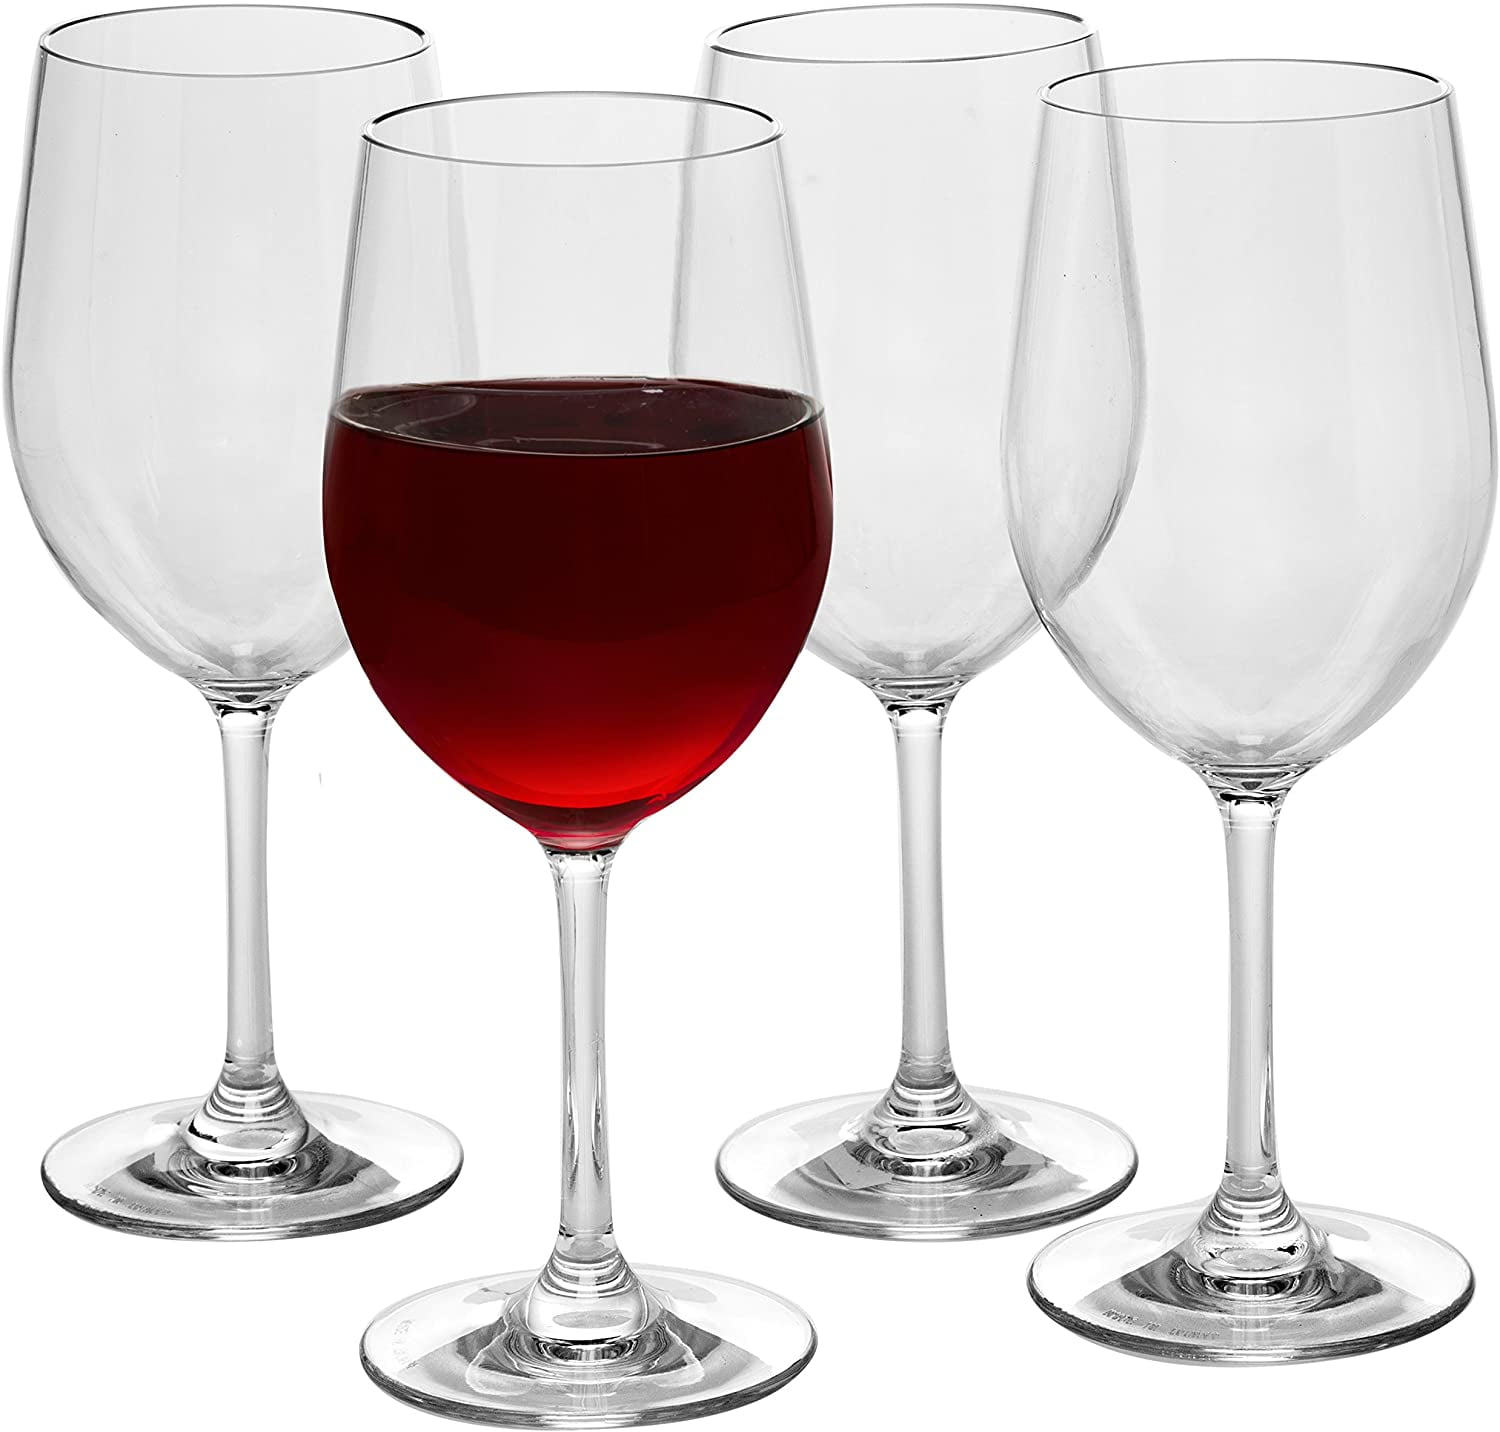 MICHLEY Unbreakable Wine Glasses, 100% Tritan Plastic Shatterproof Large Wine Glasses 20 oz, Set of 4